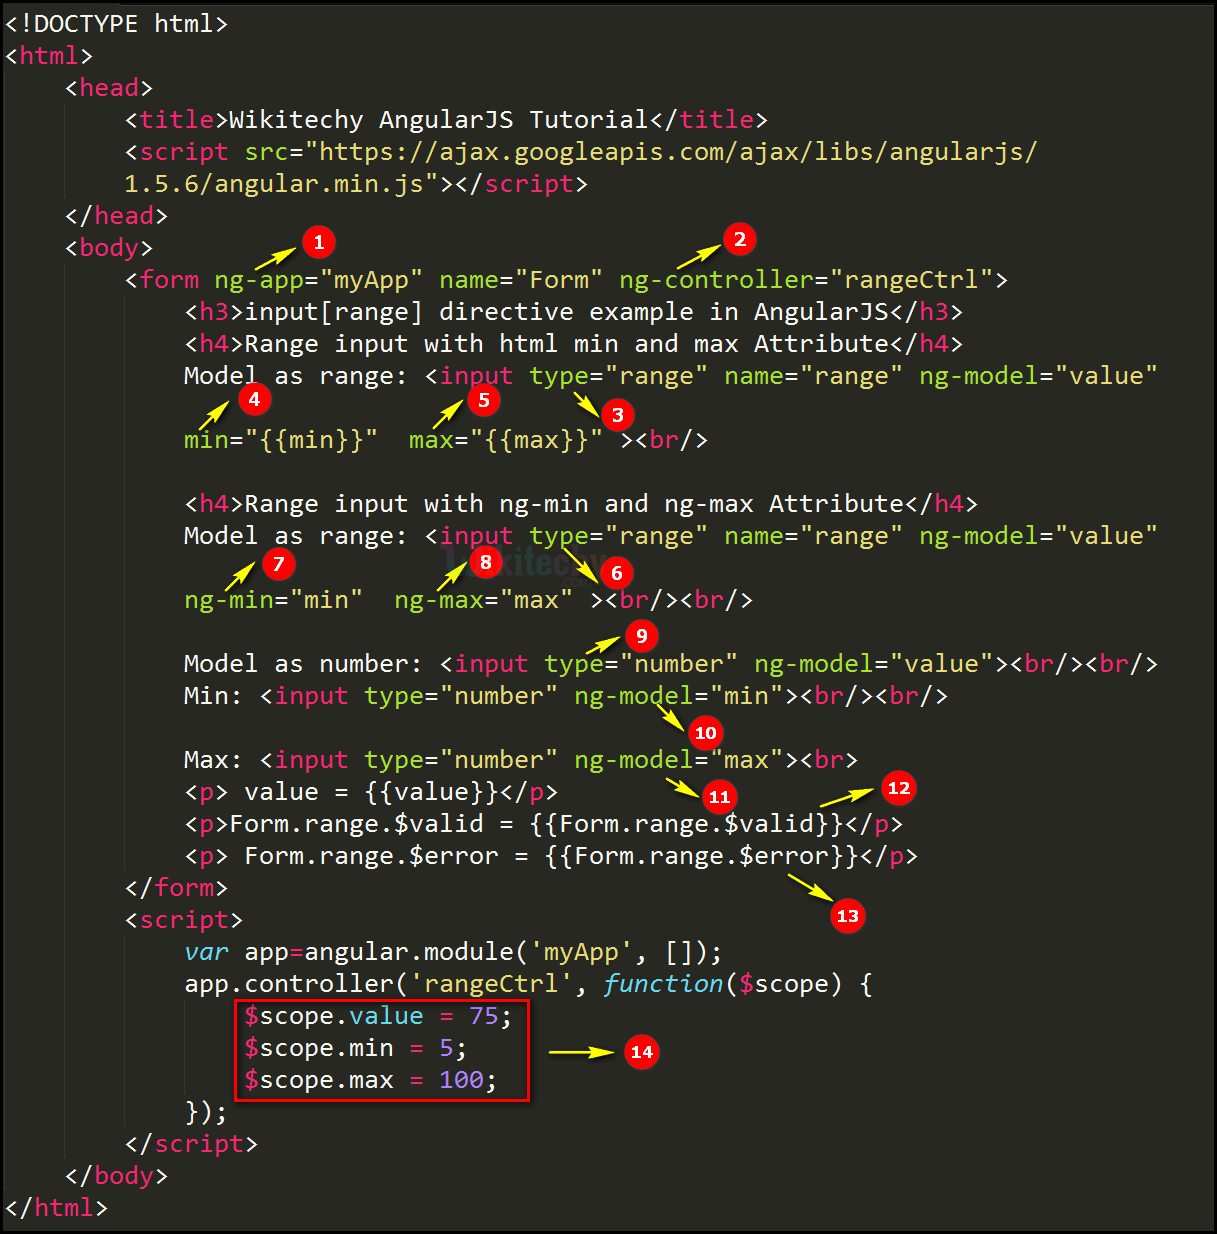 Code Explanation for AngularJS Input Range